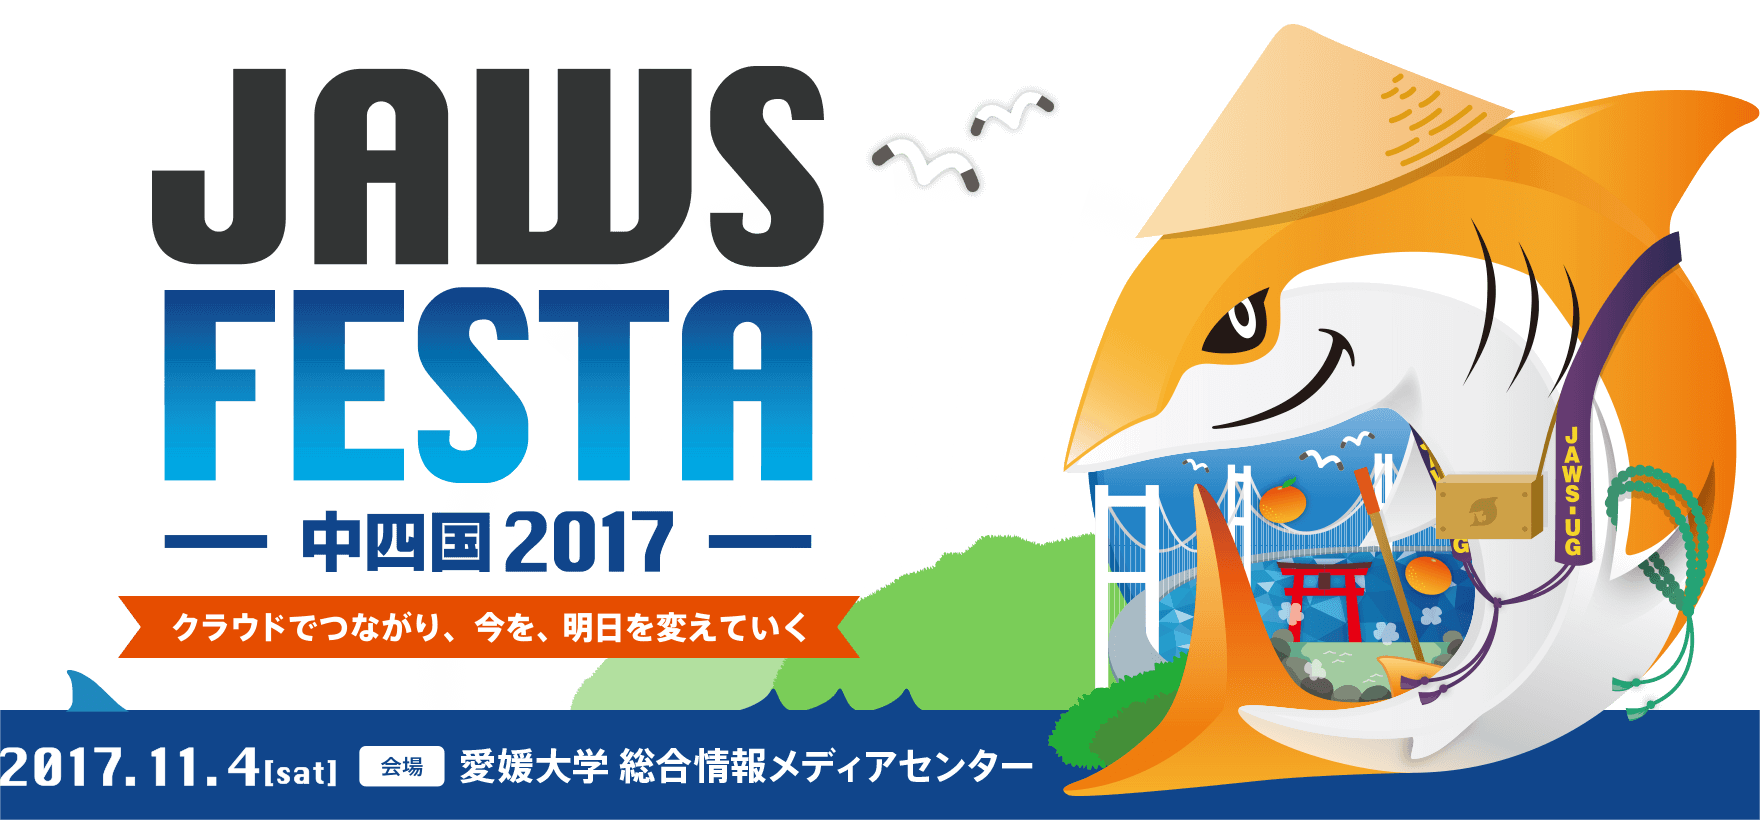 JAWS FESTA 2017